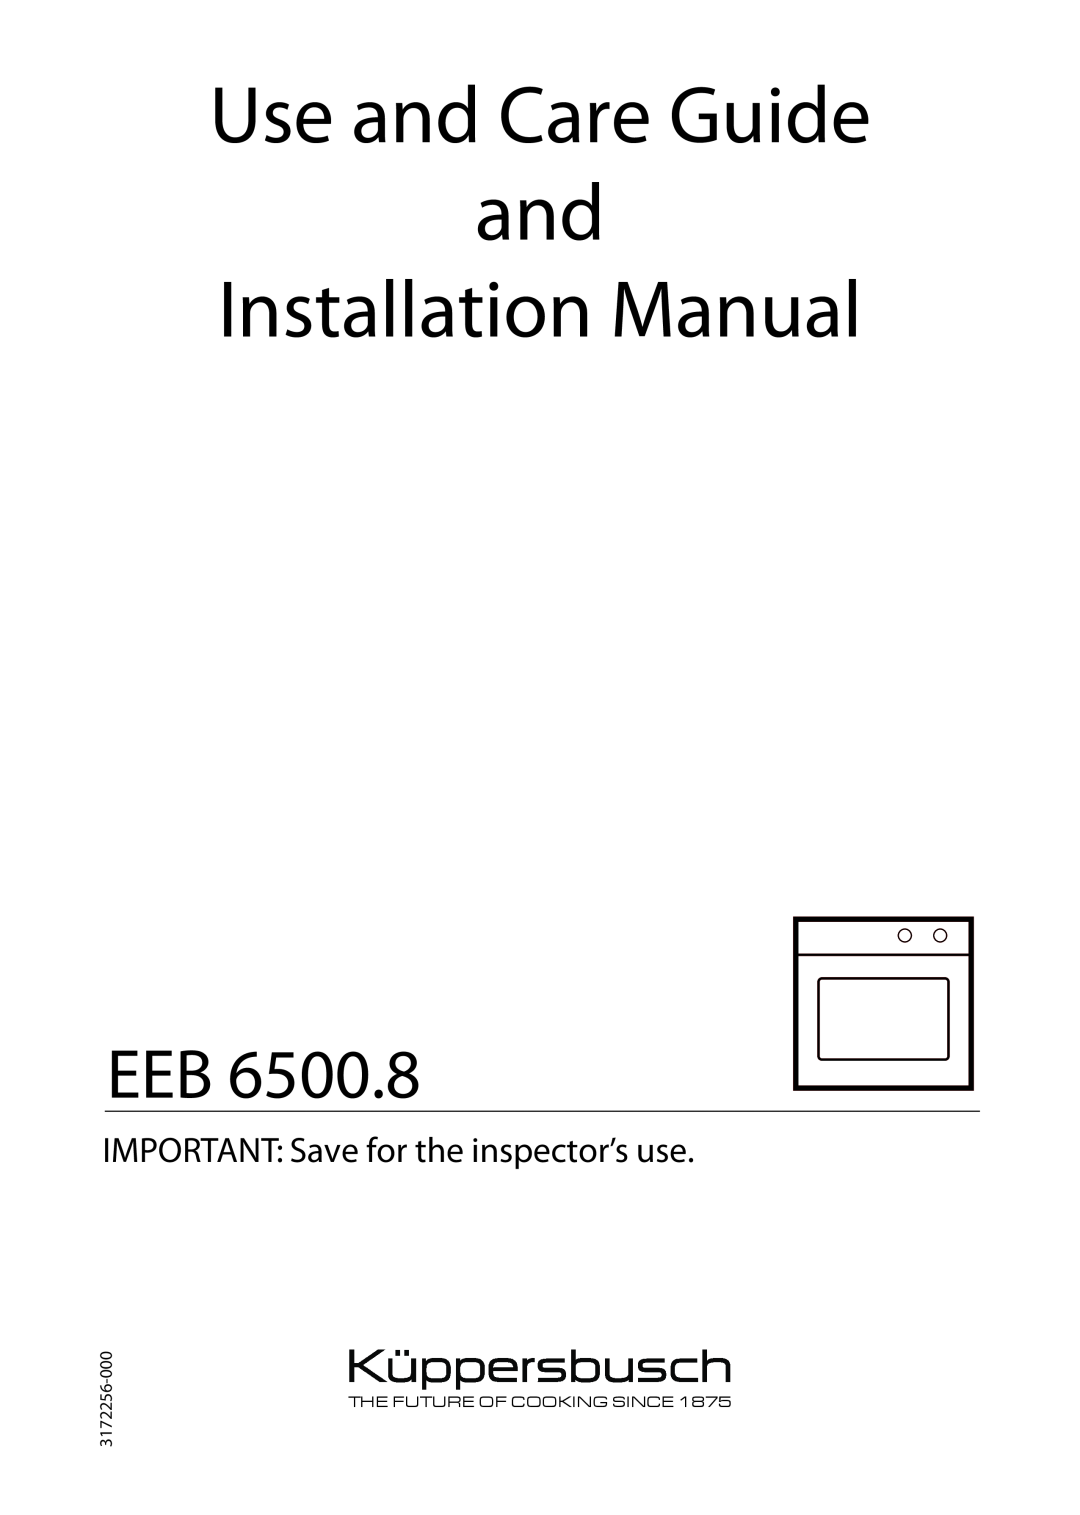 Kuppersbusch USA EEB 6500.8 installation manual Use and Care Guide and Installation Manual, EEBbb =SRMMKR6500.8 